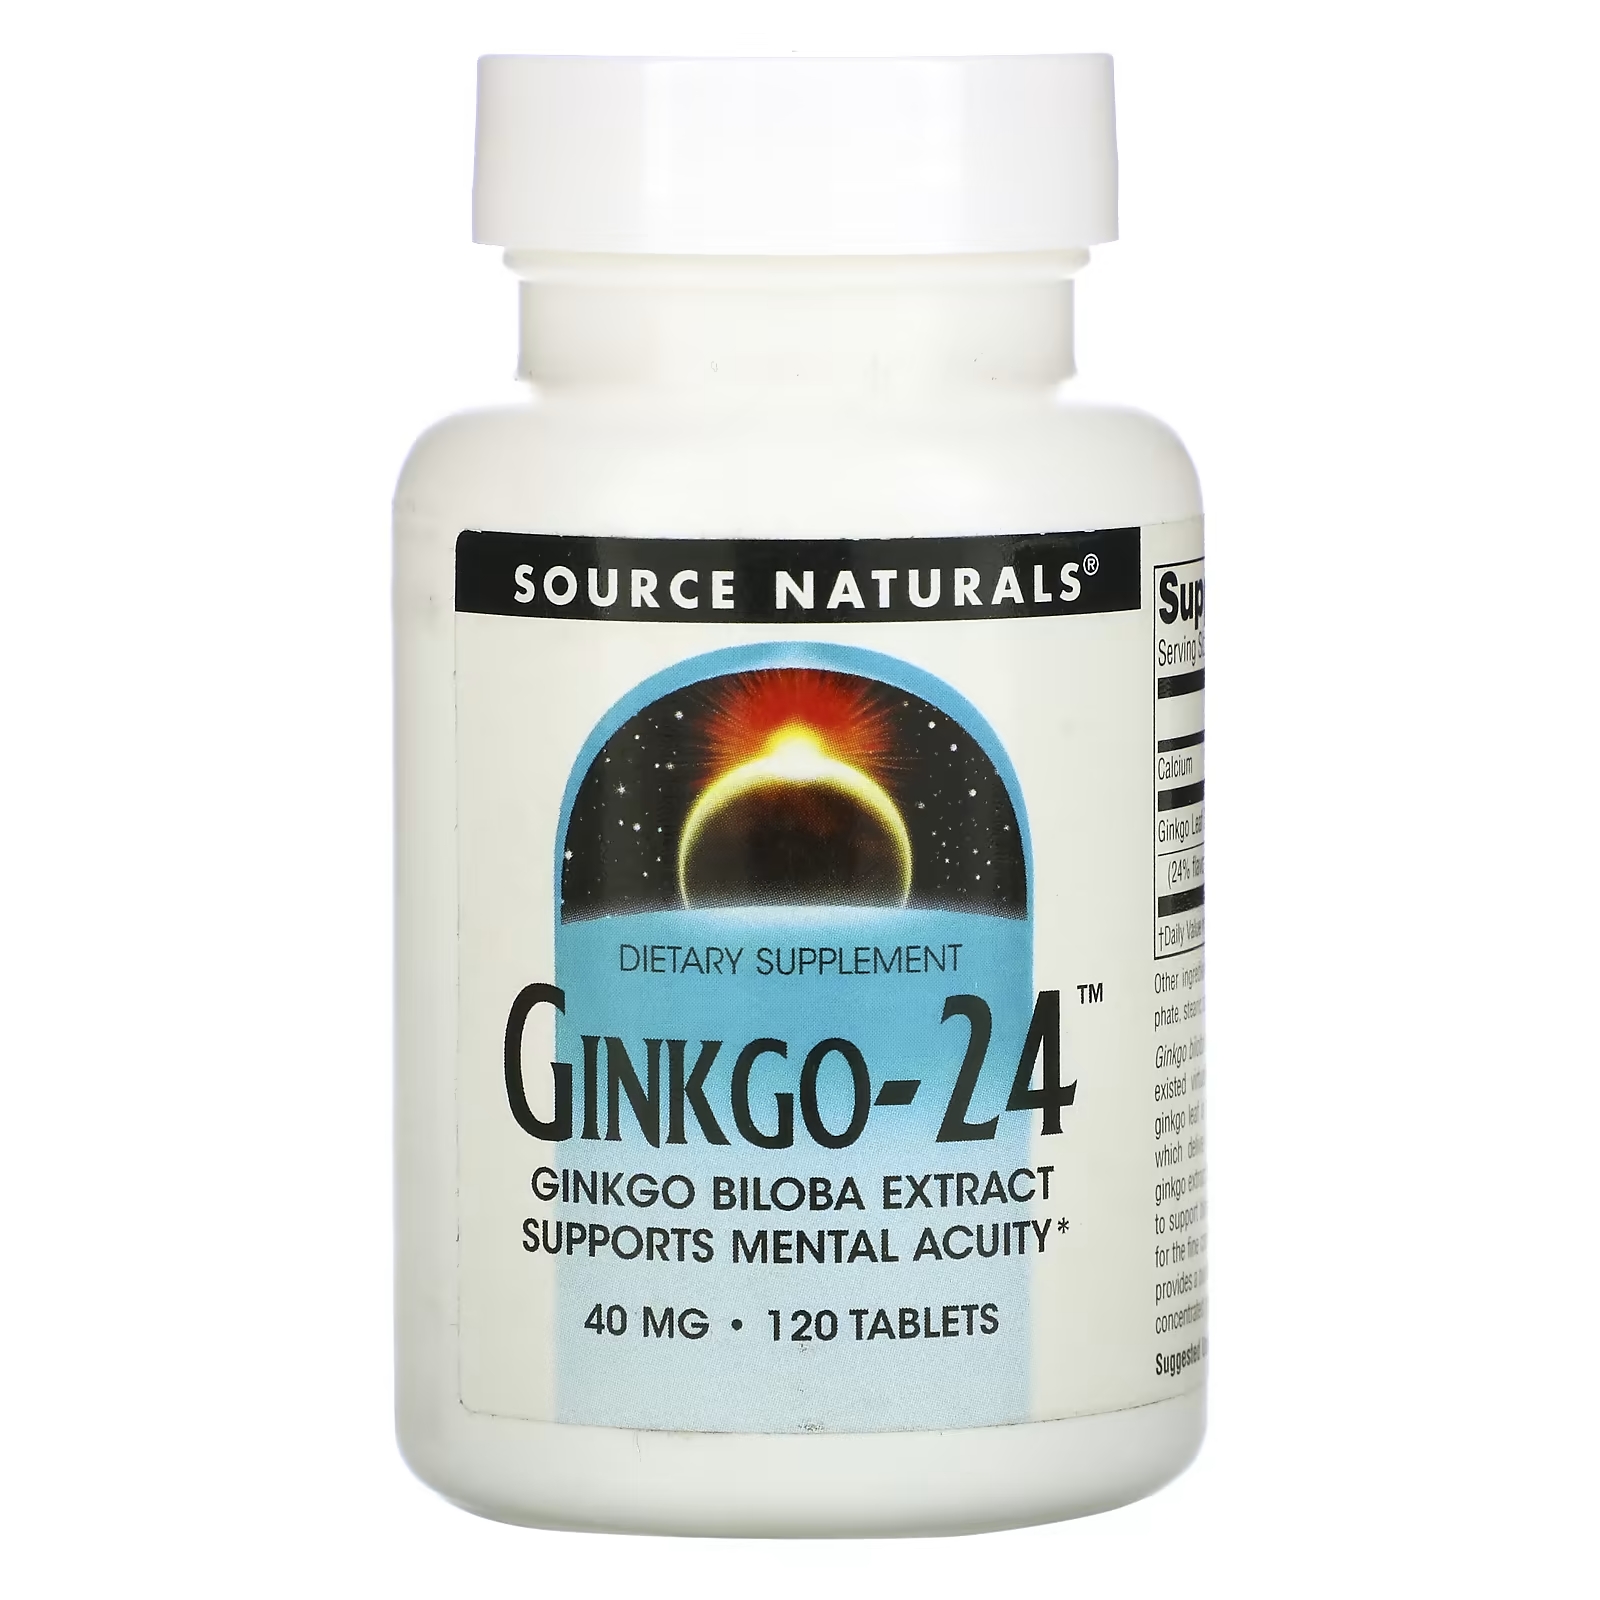 source naturals ginkgo 24 гинкго билоба 120 мг 120 таблеток Source Naturals Гинкго-24 40 мг, 120 таблеток